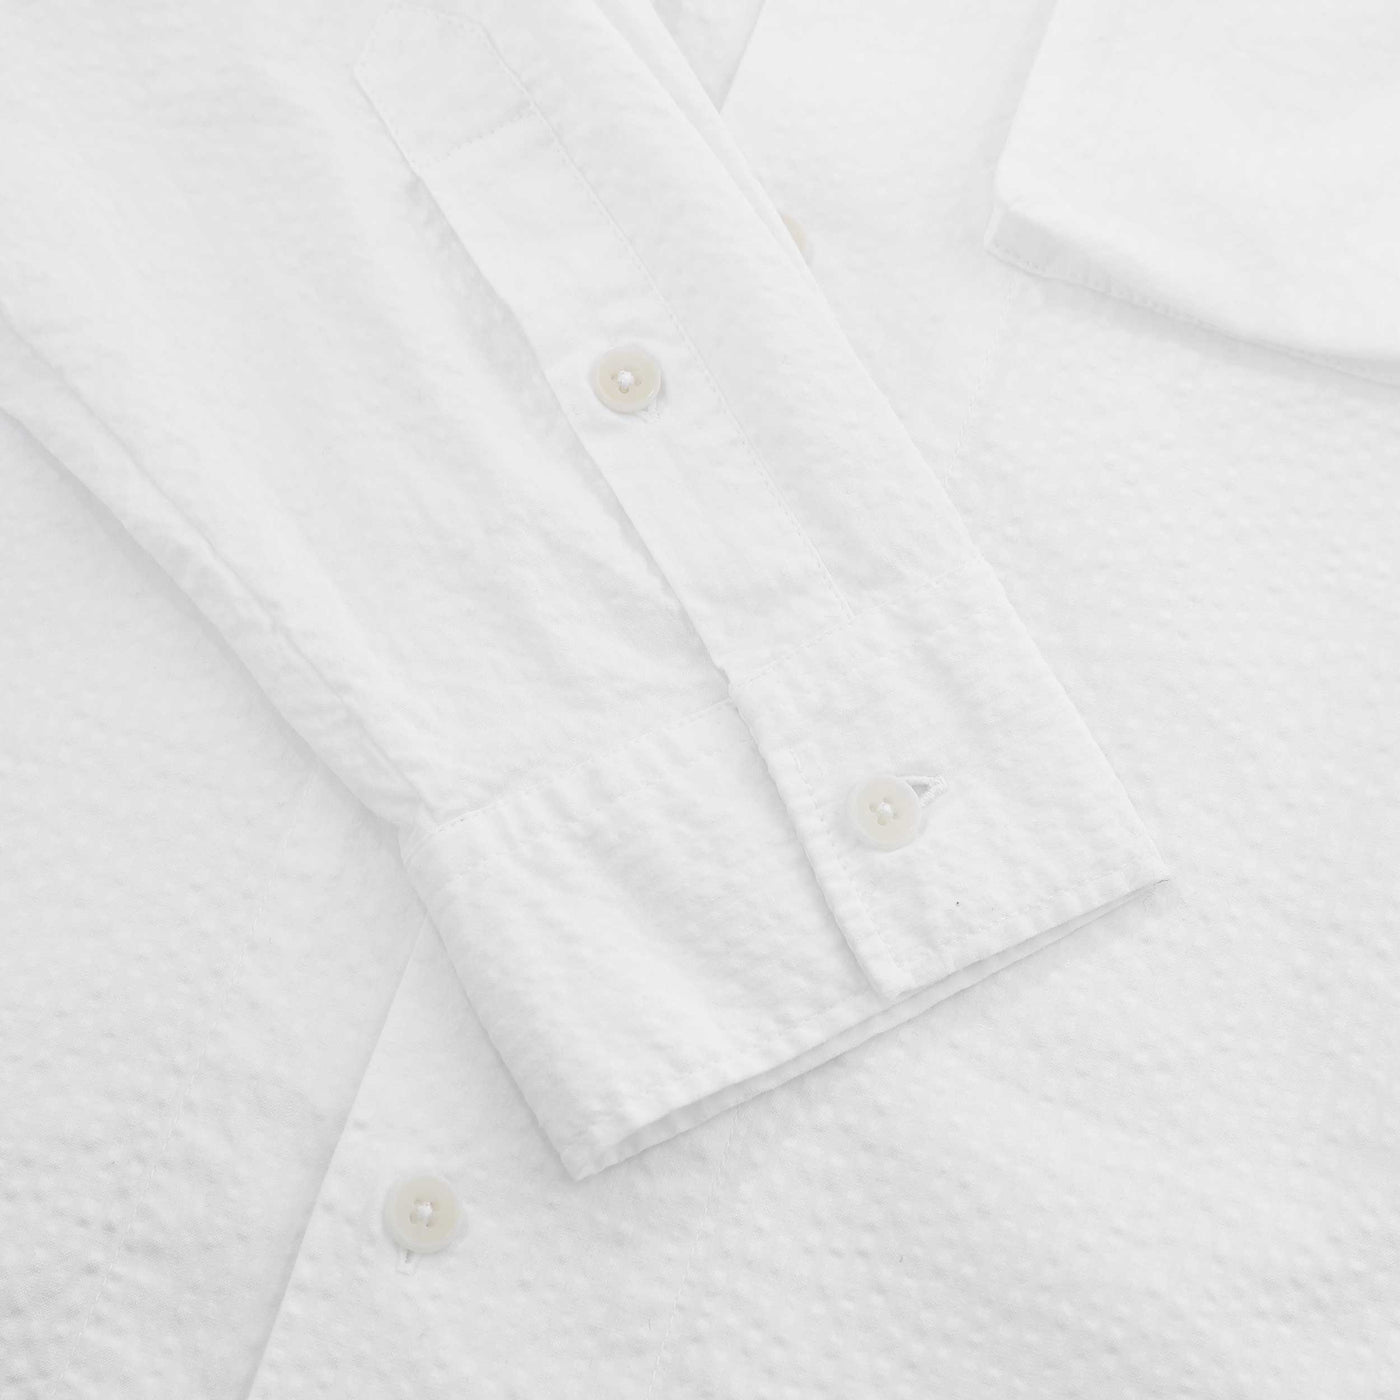 Belstaff Caster Shirt in White Cuff